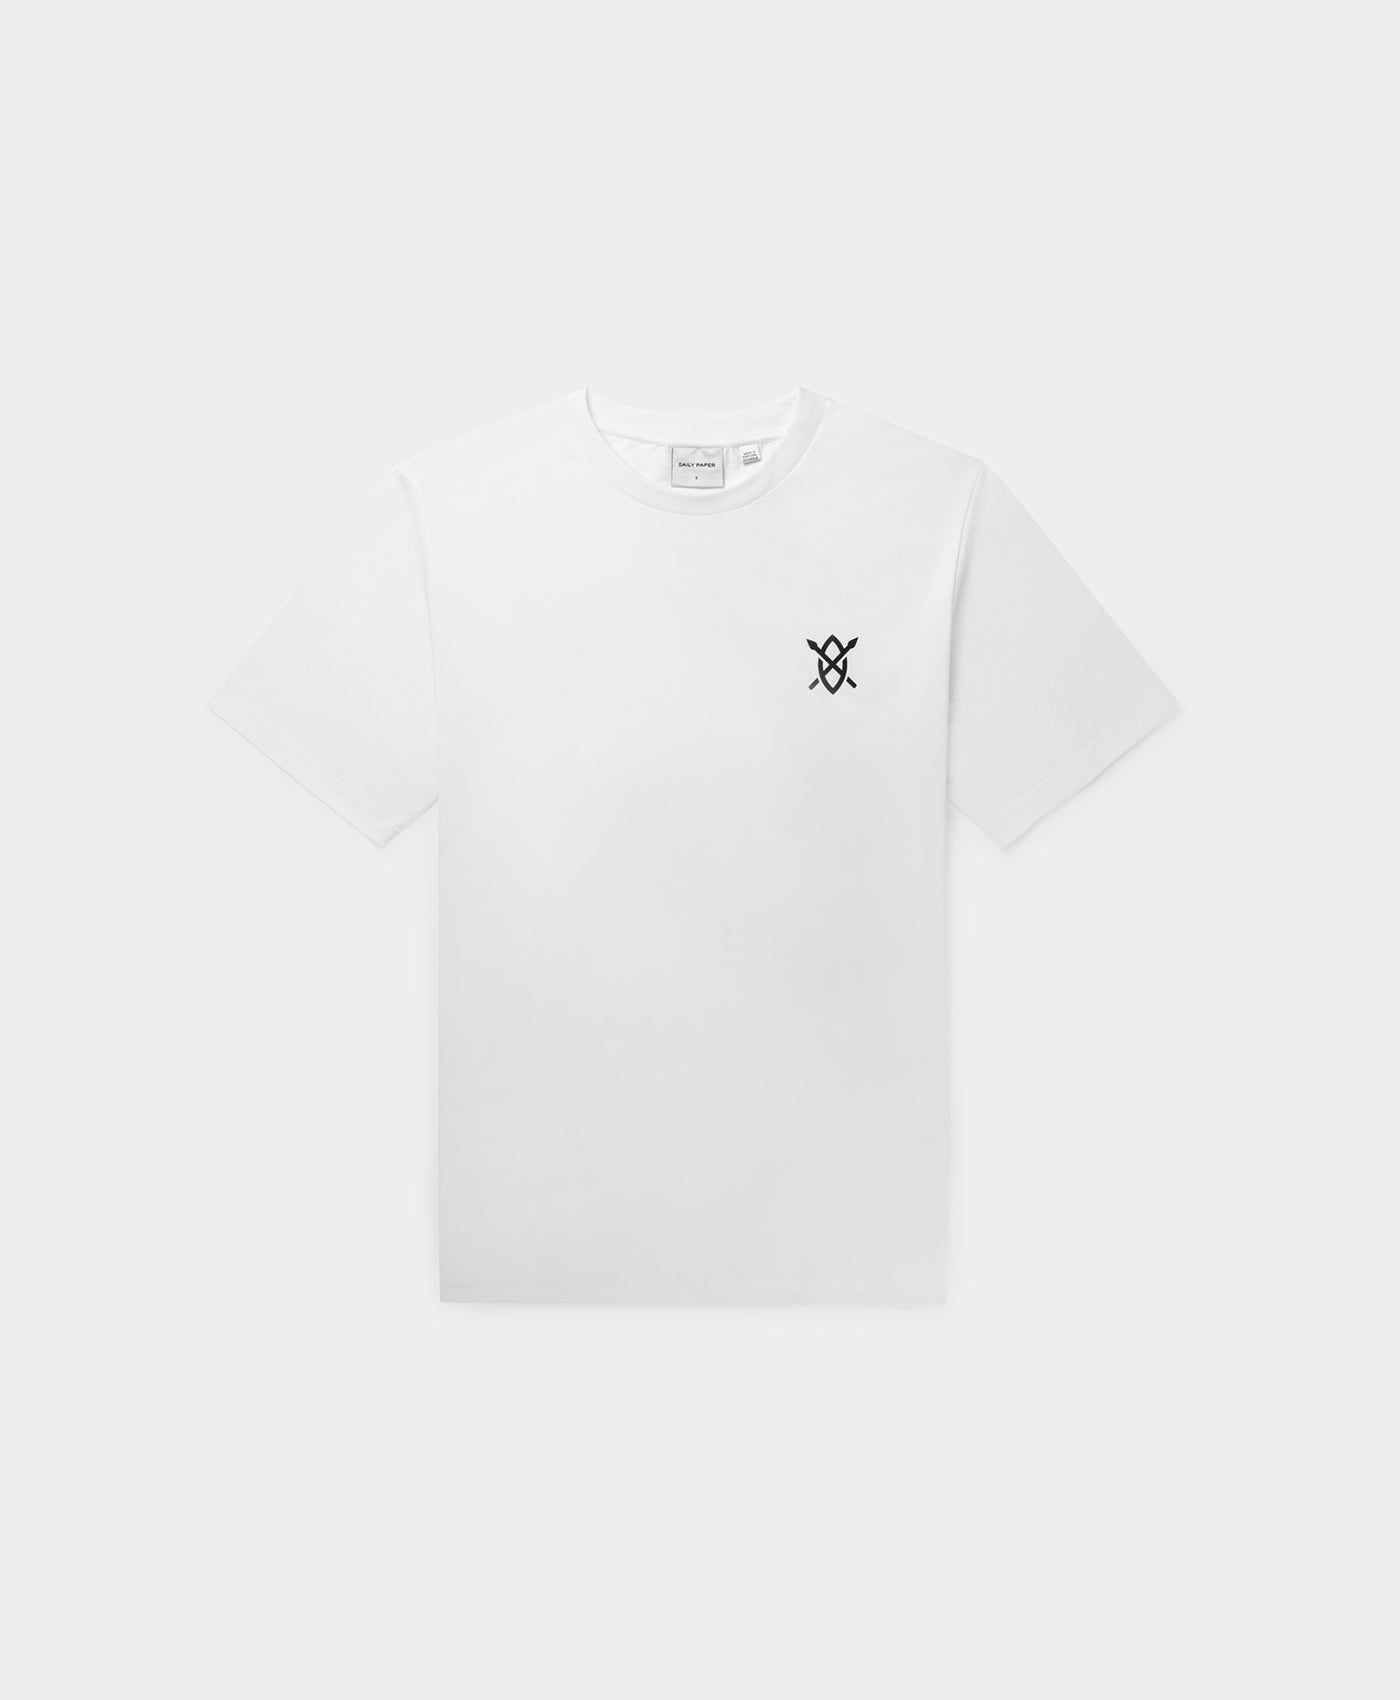 DP - White Black NY Flagship Store T-Shirt - Packshot - Rear